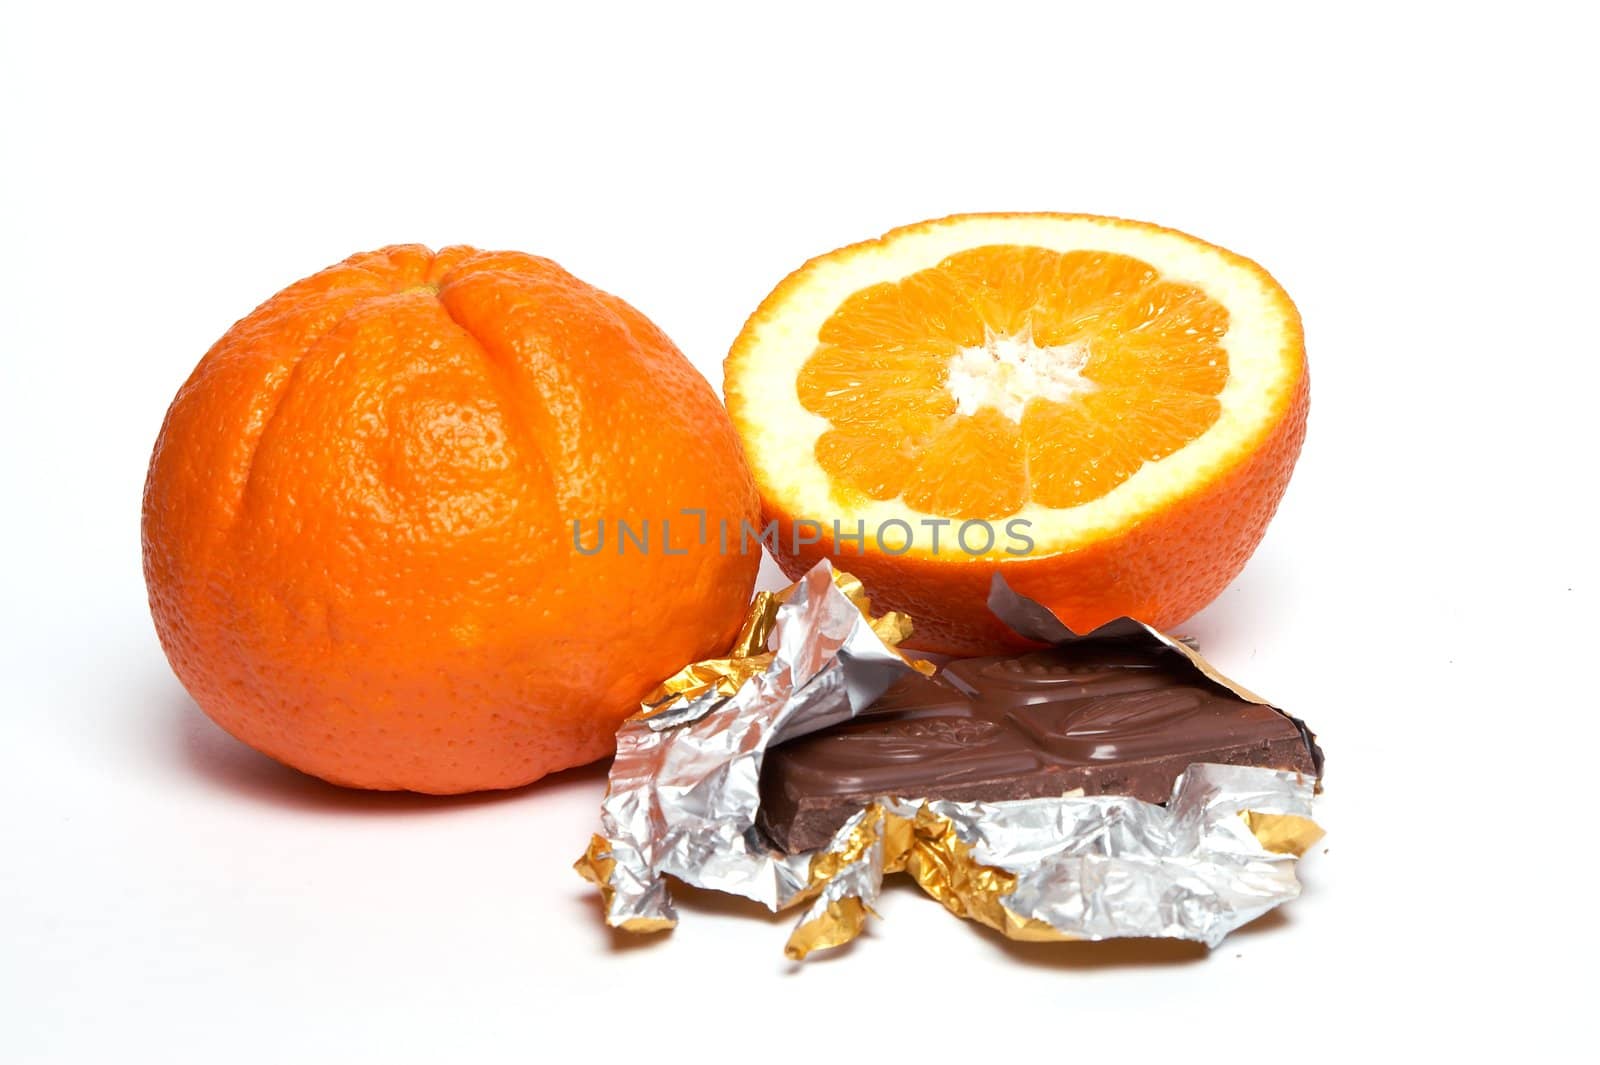 Chocolate or orange. Saparate on white.